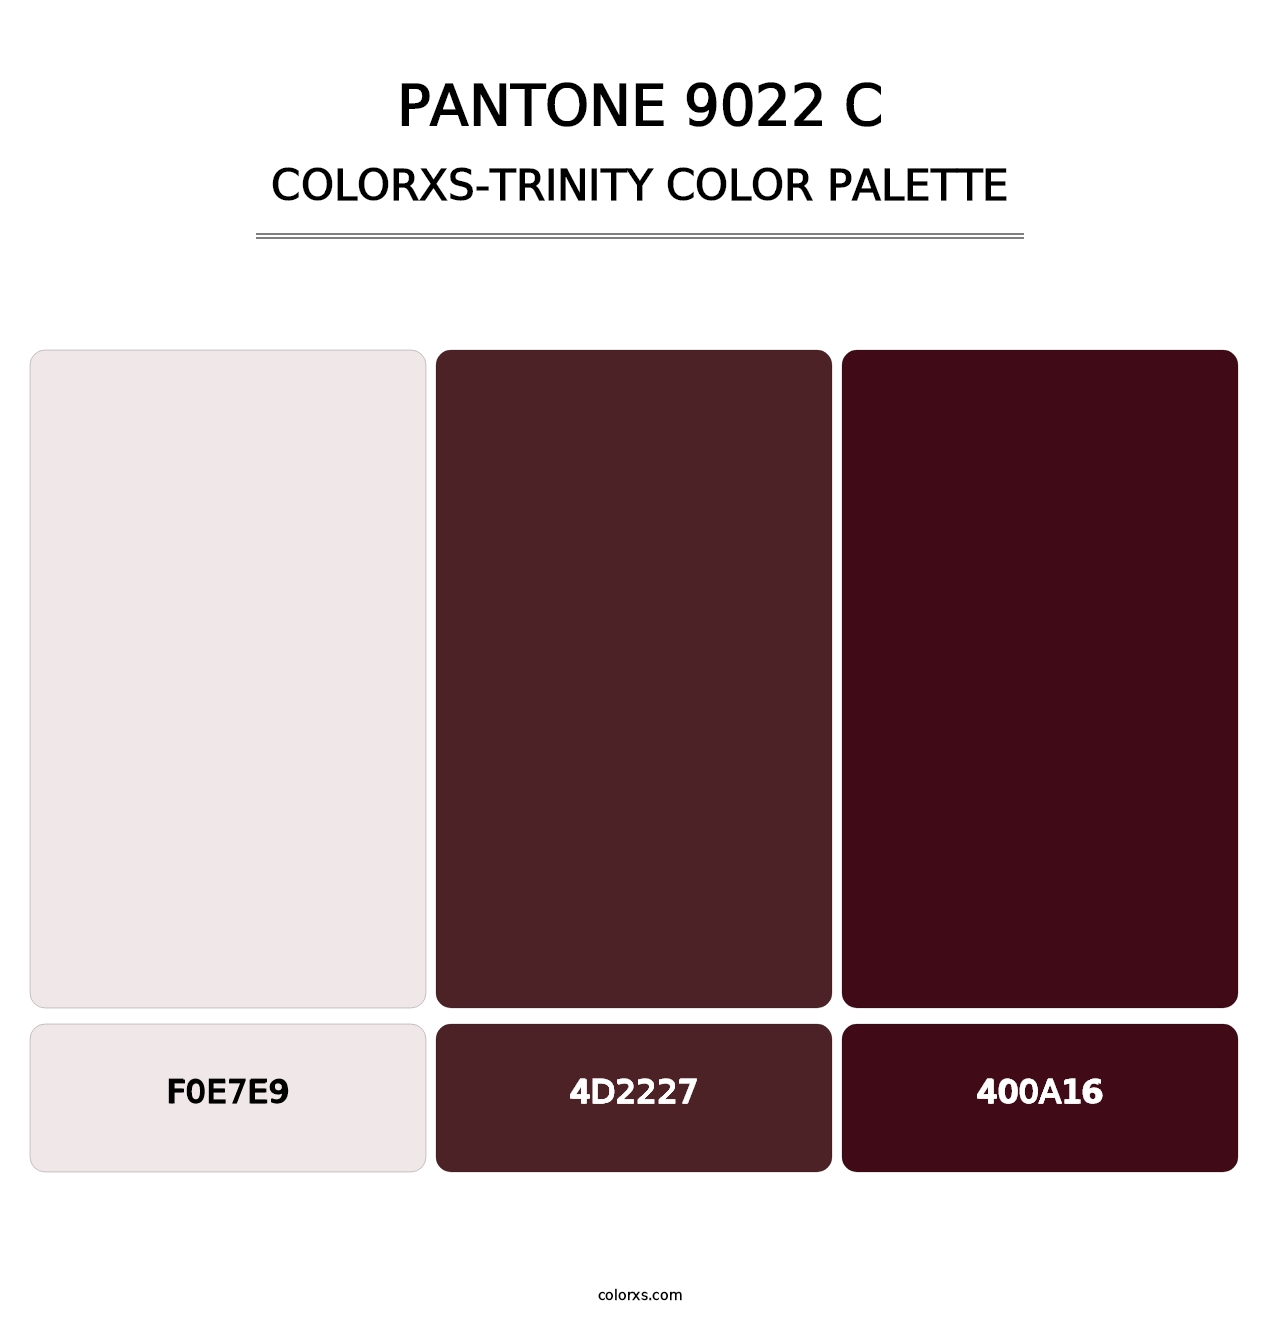 PANTONE 9022 C - Colorxs Trinity Palette